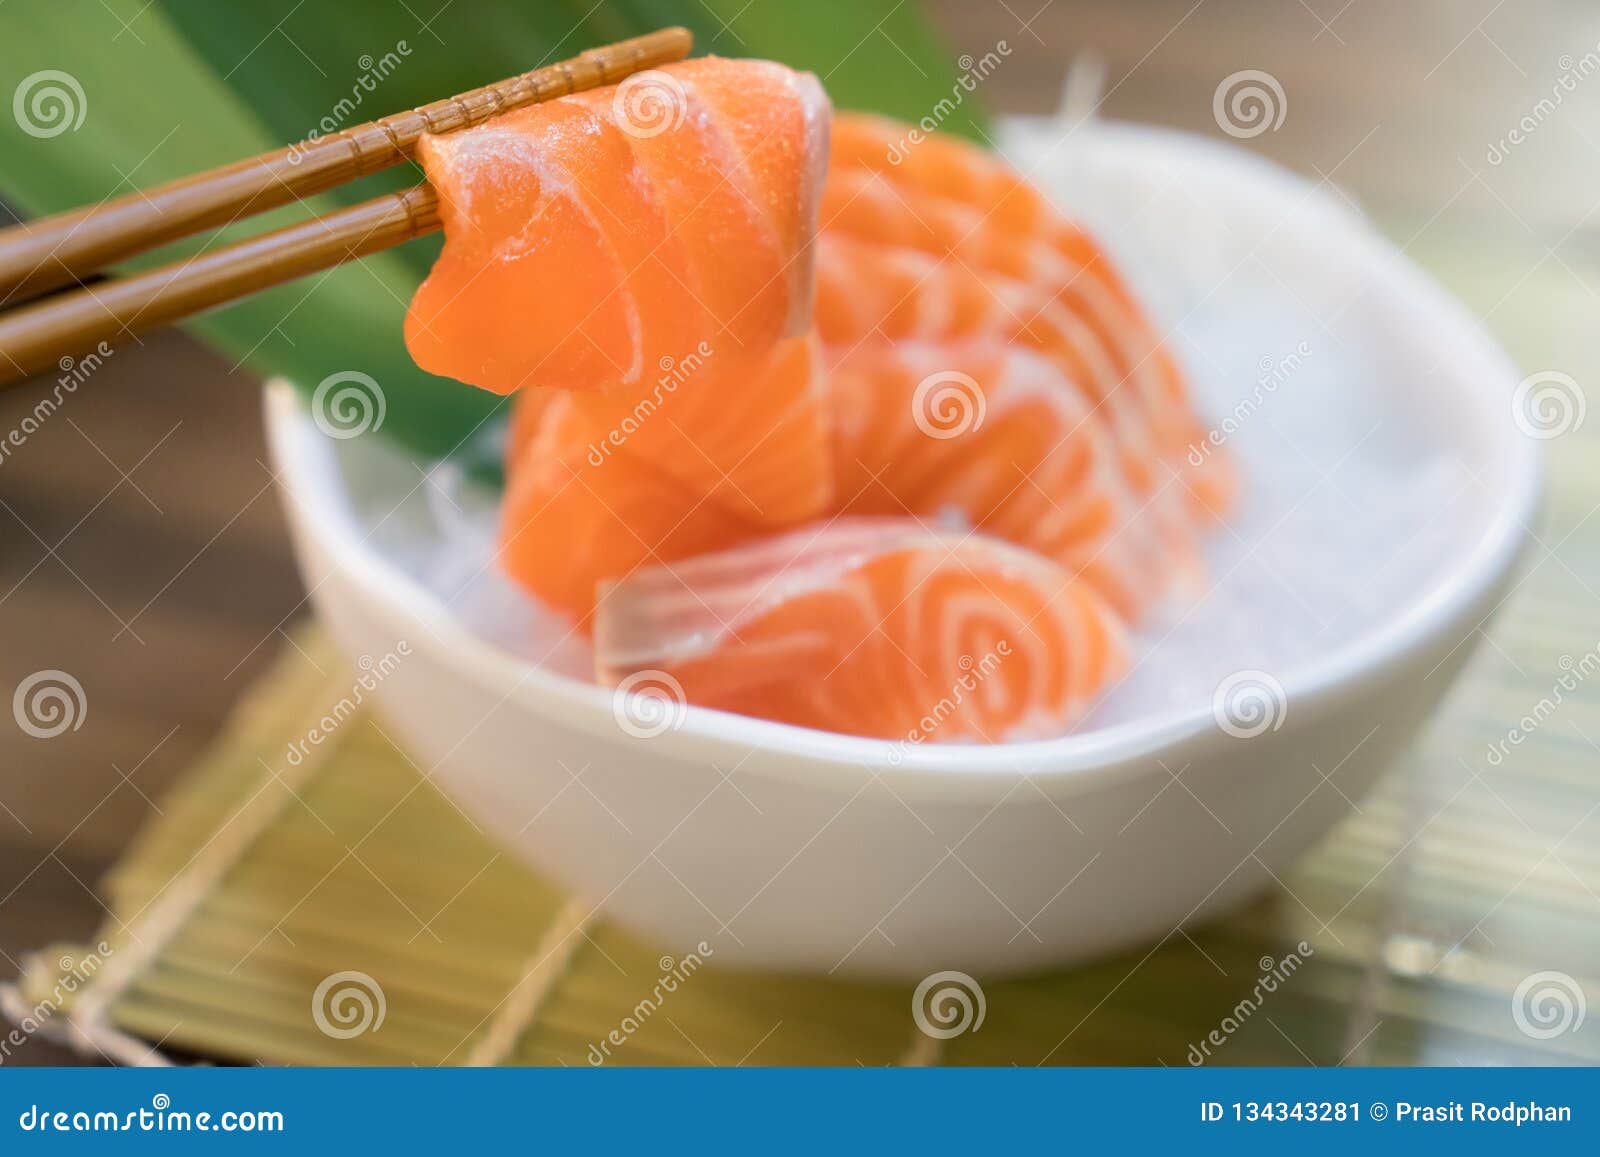 chopsticks with salmon sashimi with salmon sashimi on ice in with bowl. japanese food in asian restuarant